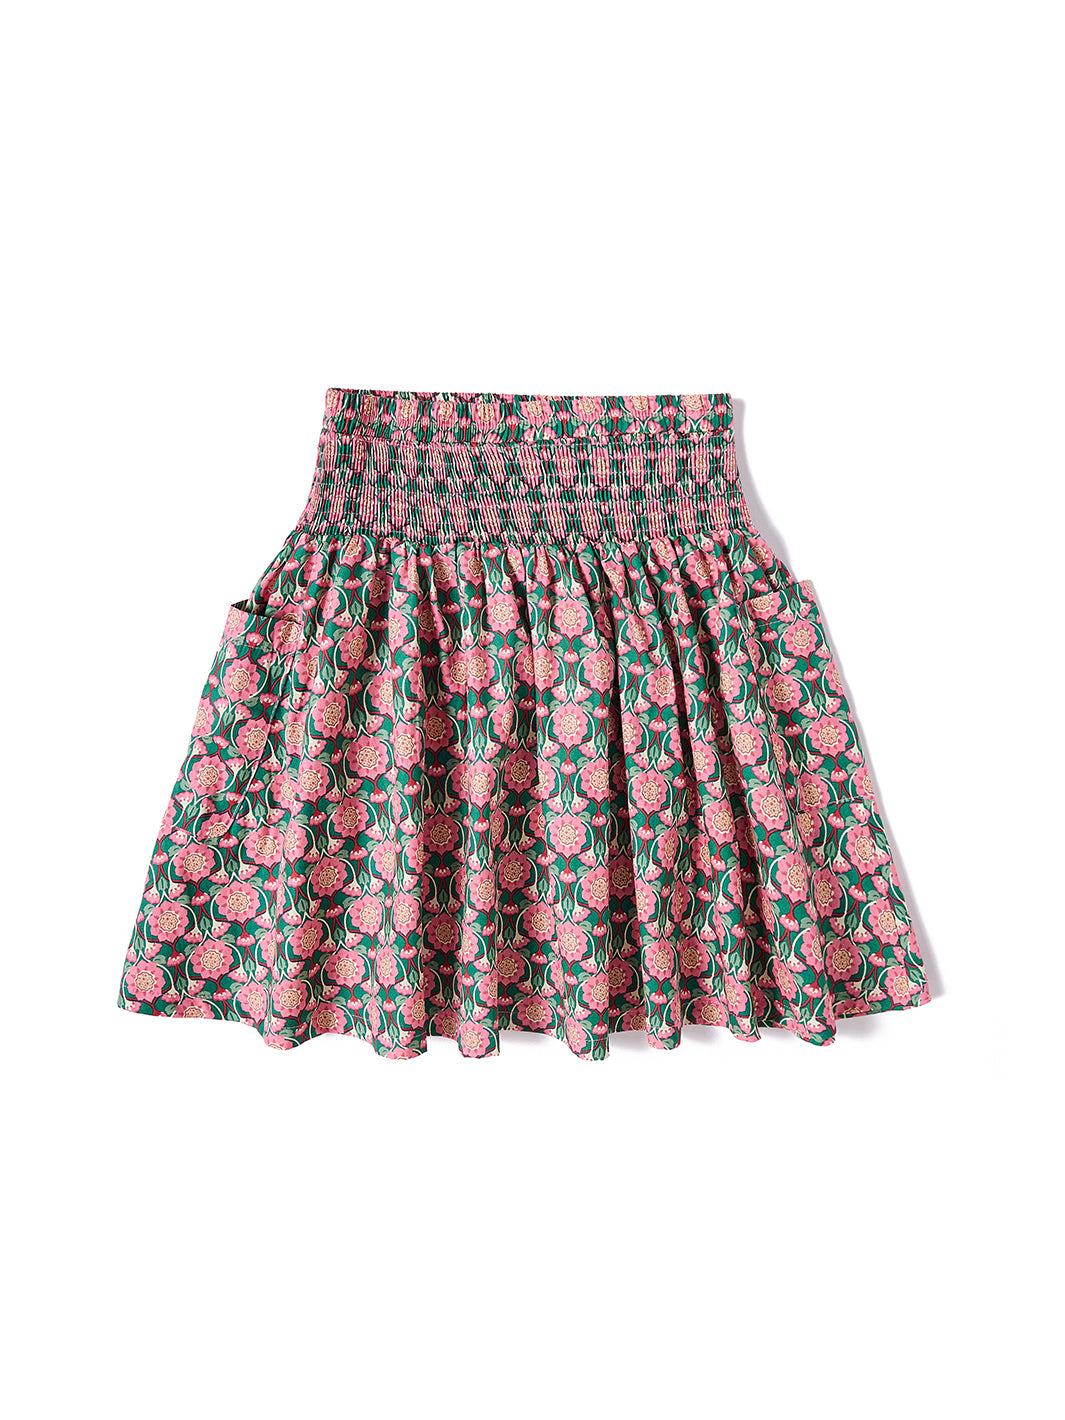 Shirring Floral Skirt - Green/Pink